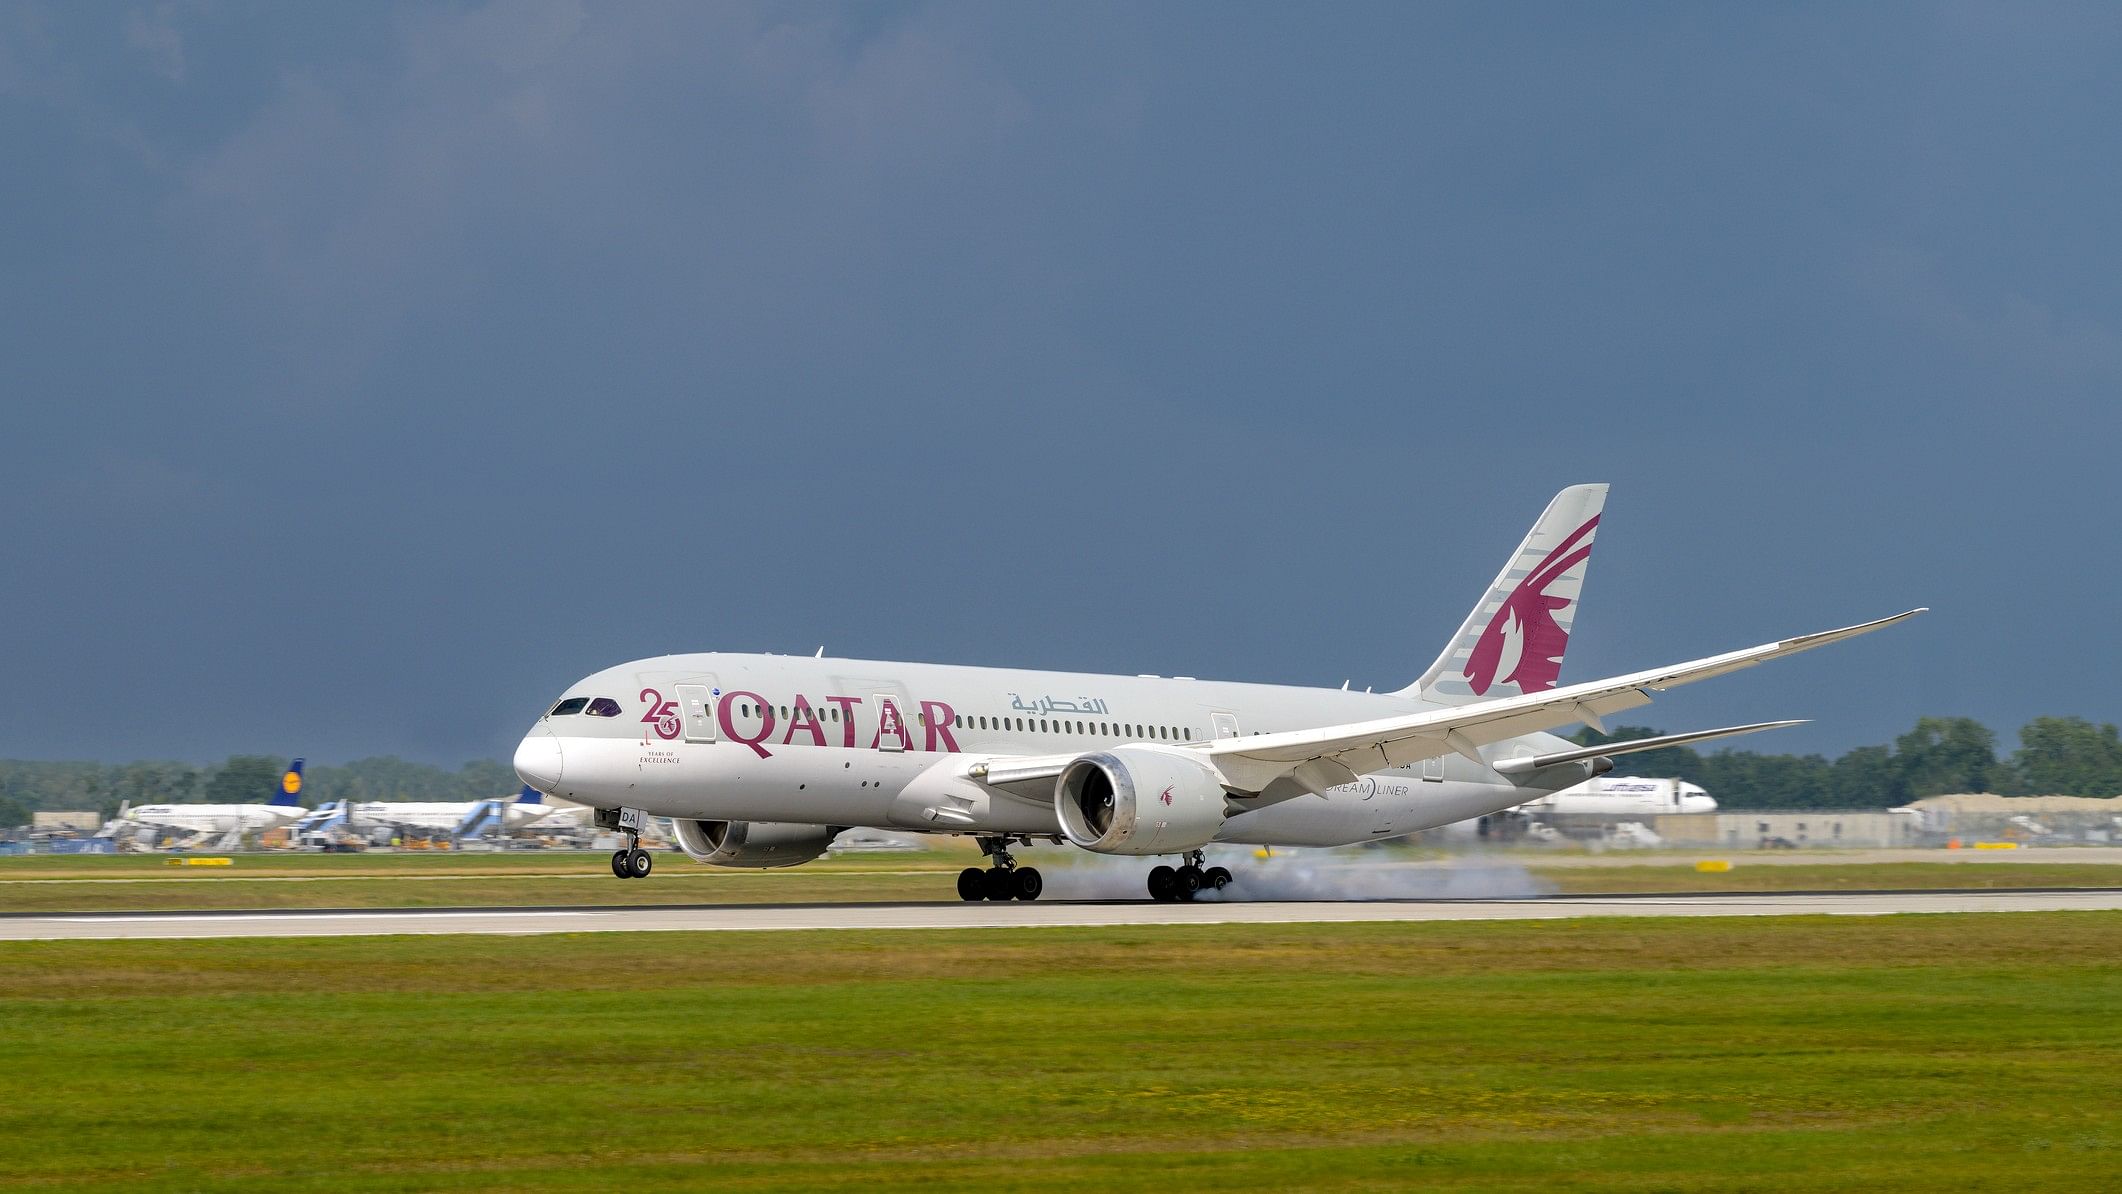 <div class="paragraphs"><p>Representative image showing a Qatar airlines airplane.</p></div>